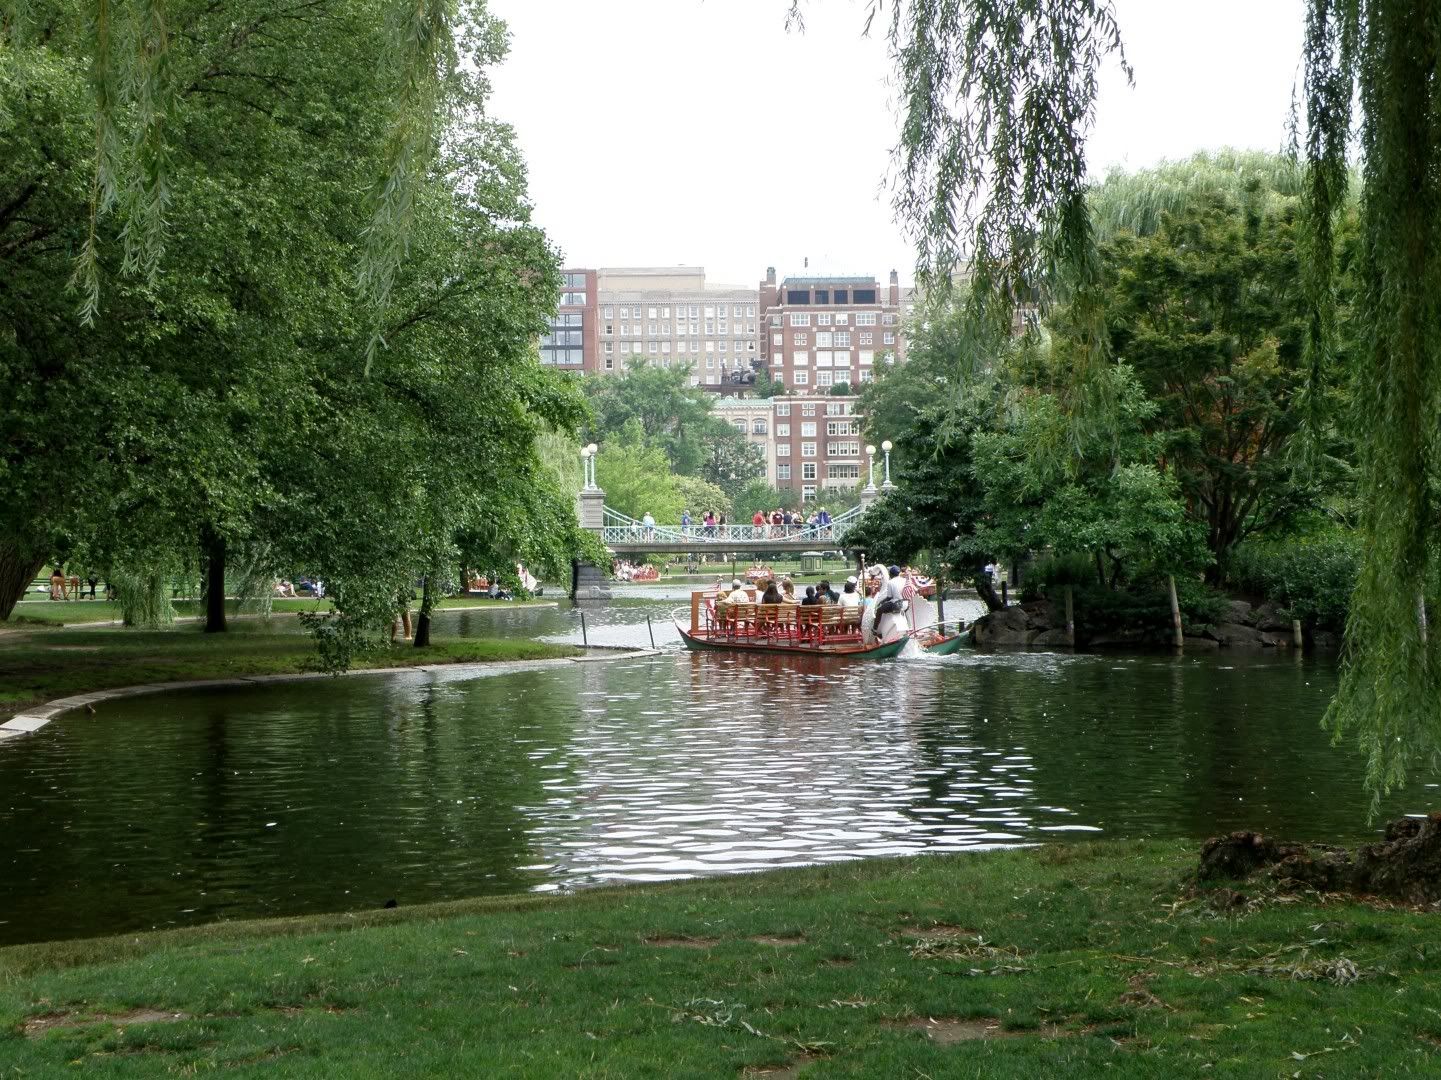 Swan Boats in the Public Gardens